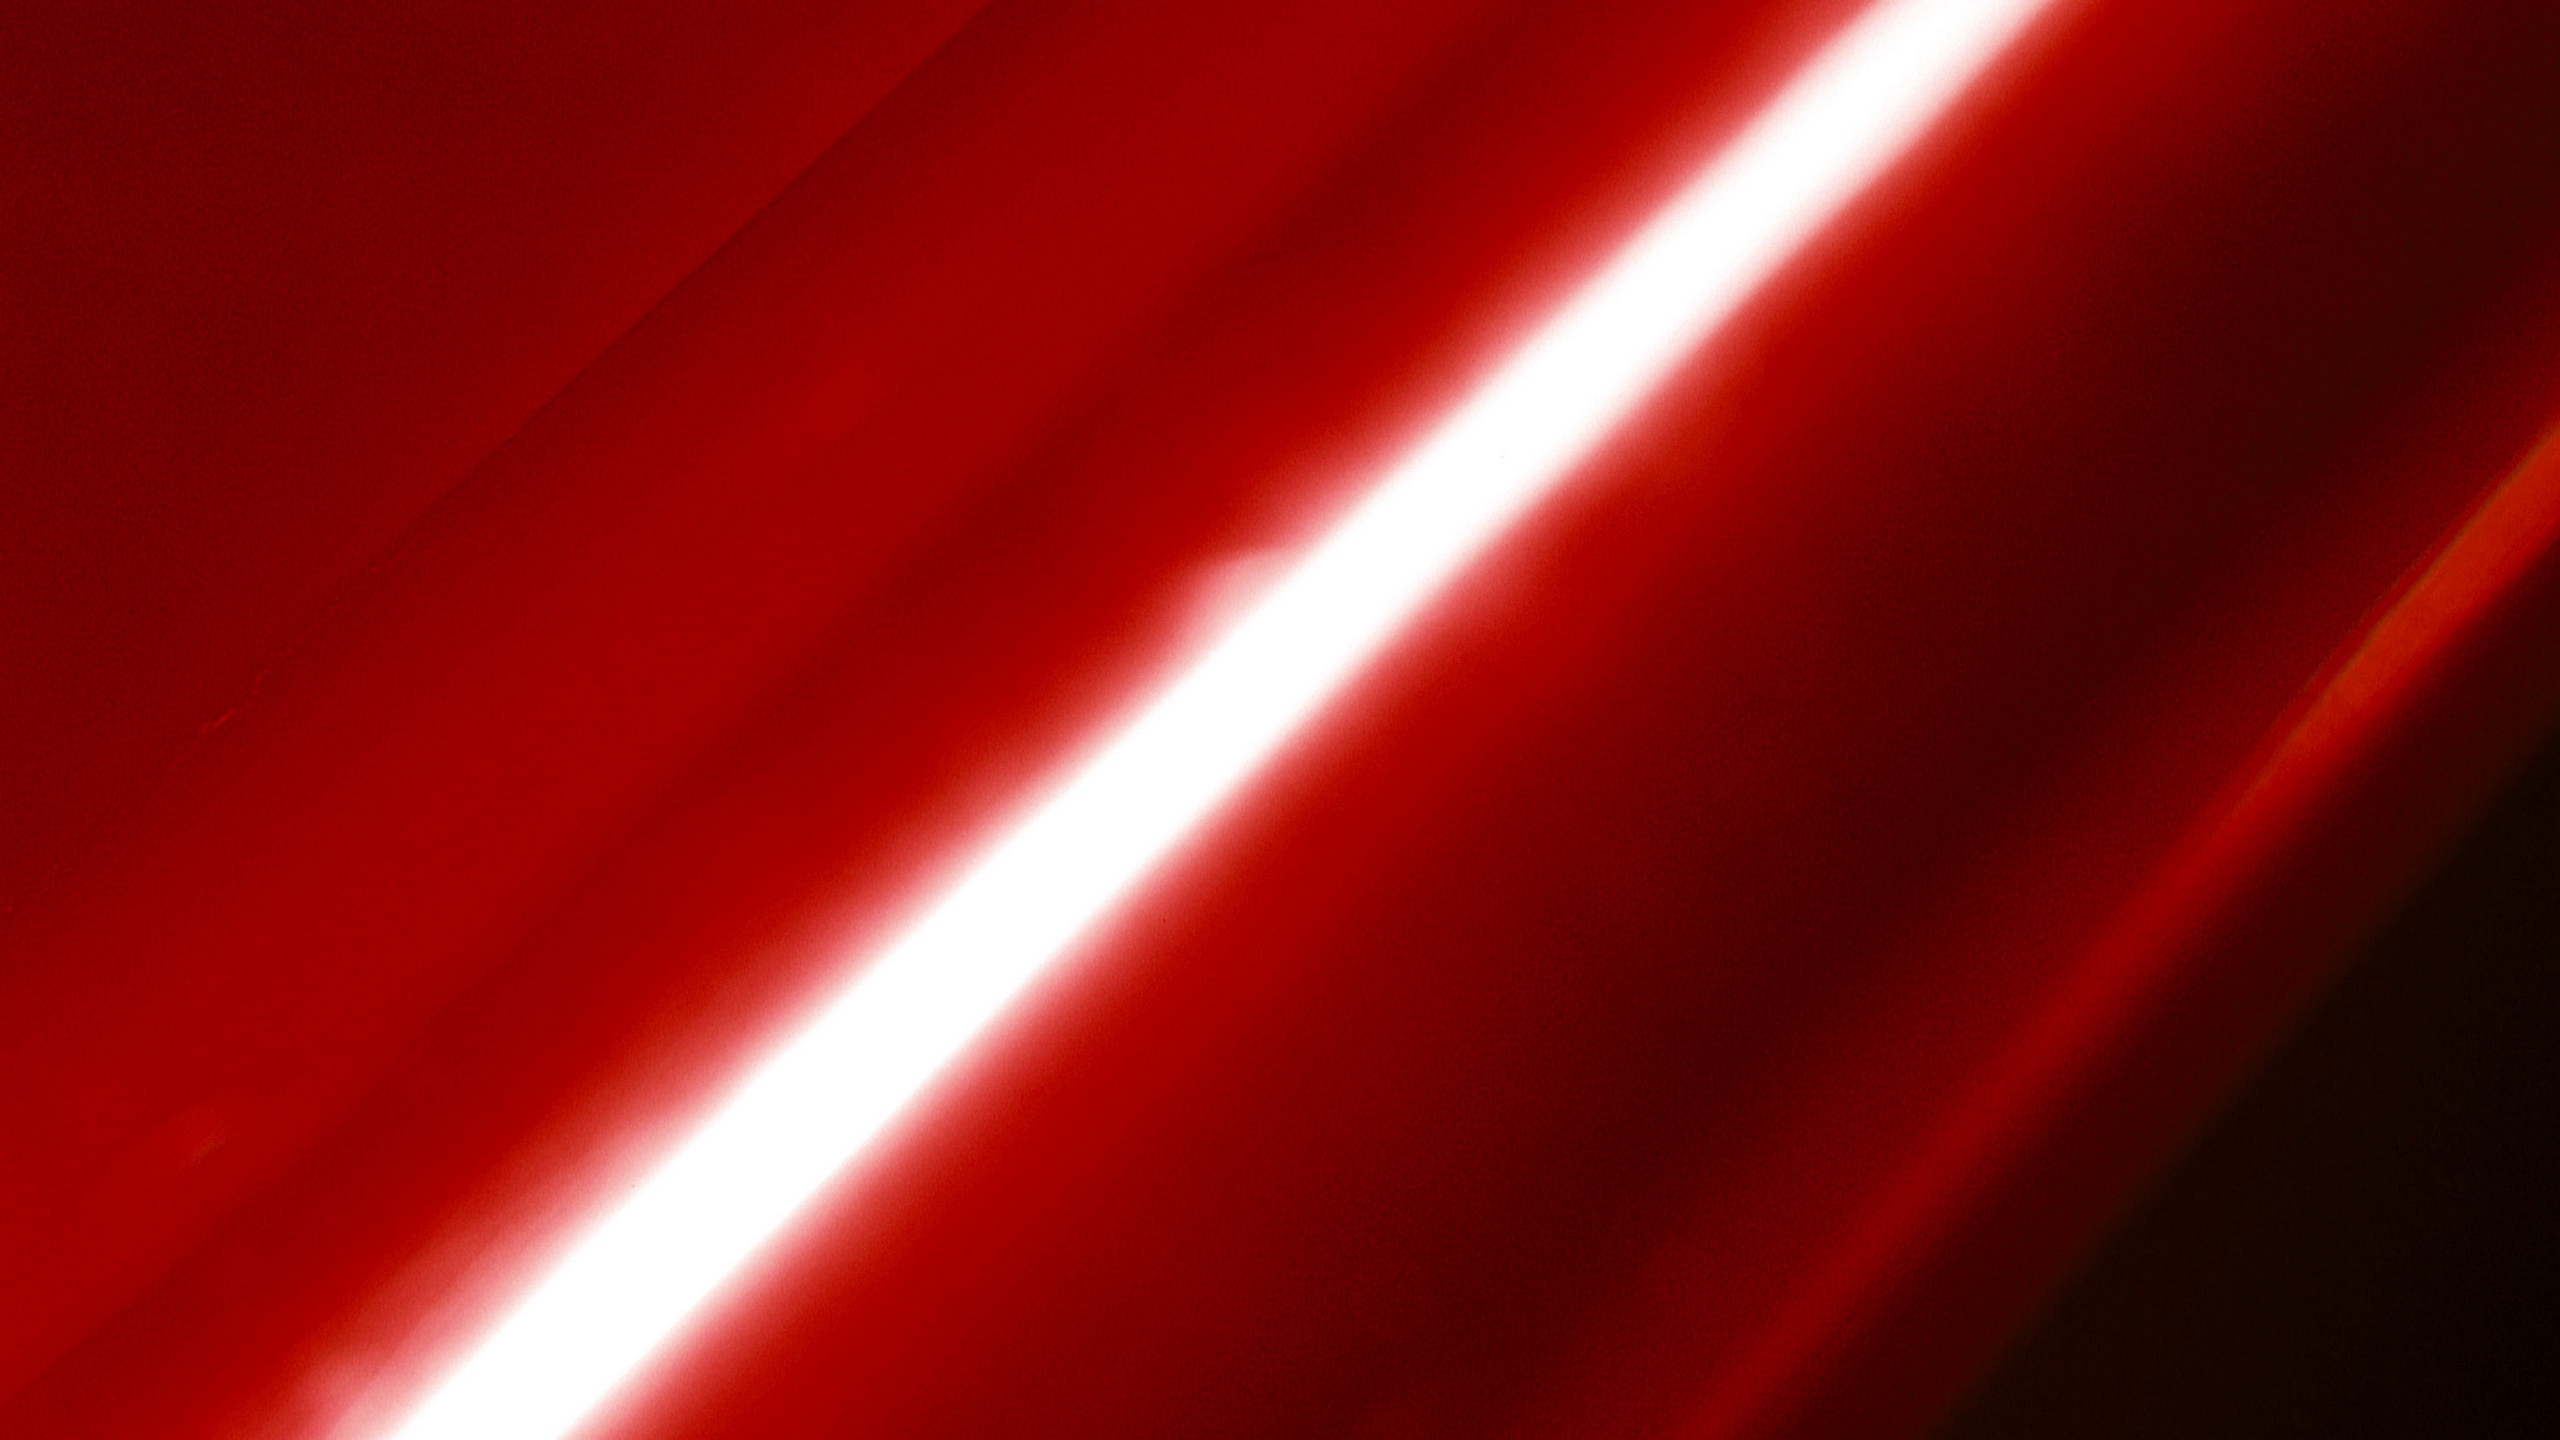 Download wallpaper 2560x1440 light, line, shiny, red widescreen 16:9 ...